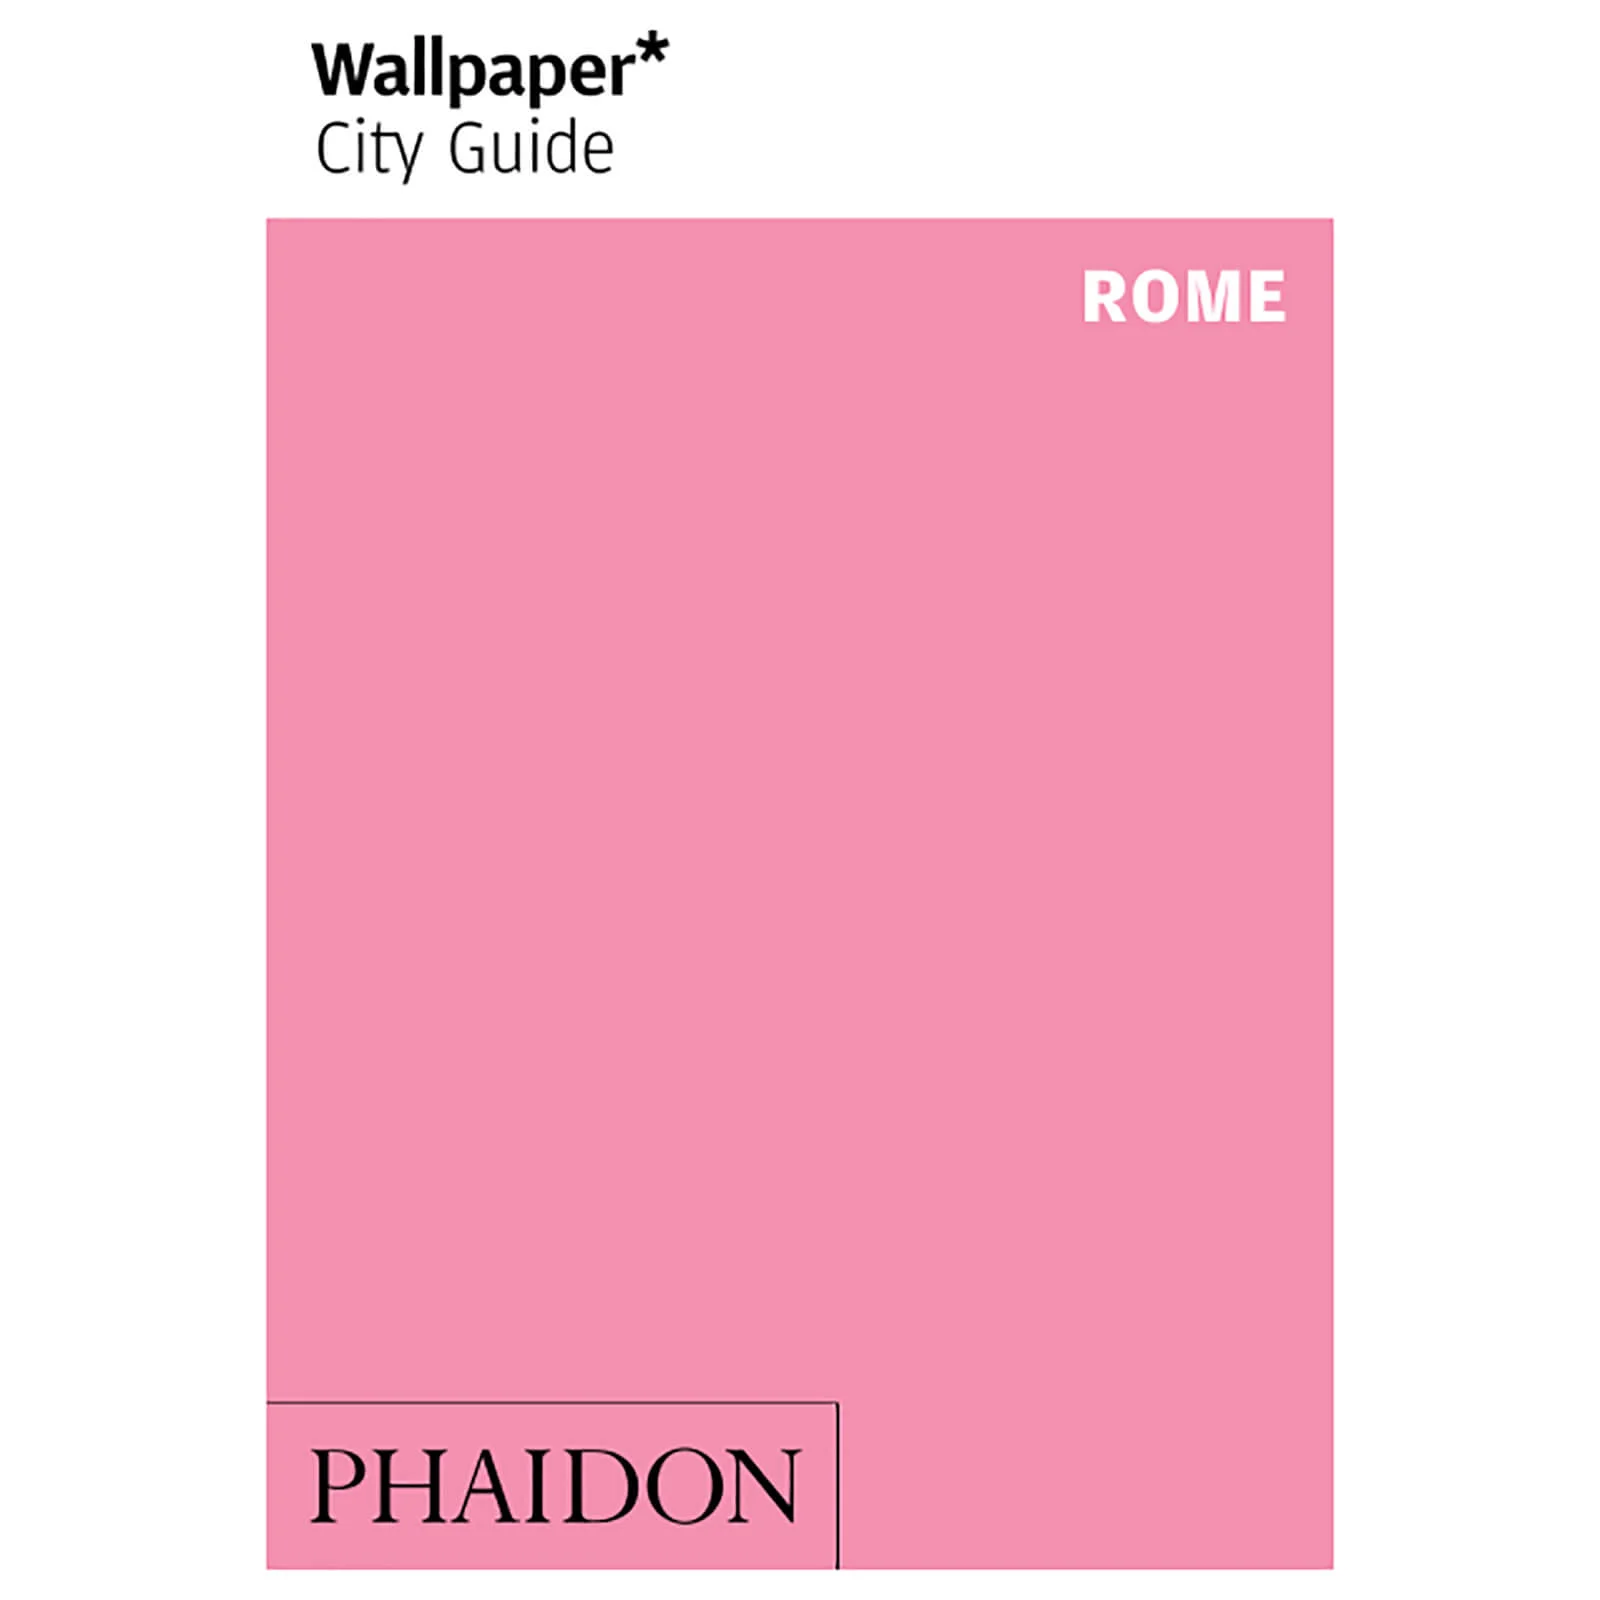 Phaidon: Wallpaper* City Guide - Rome Image 1